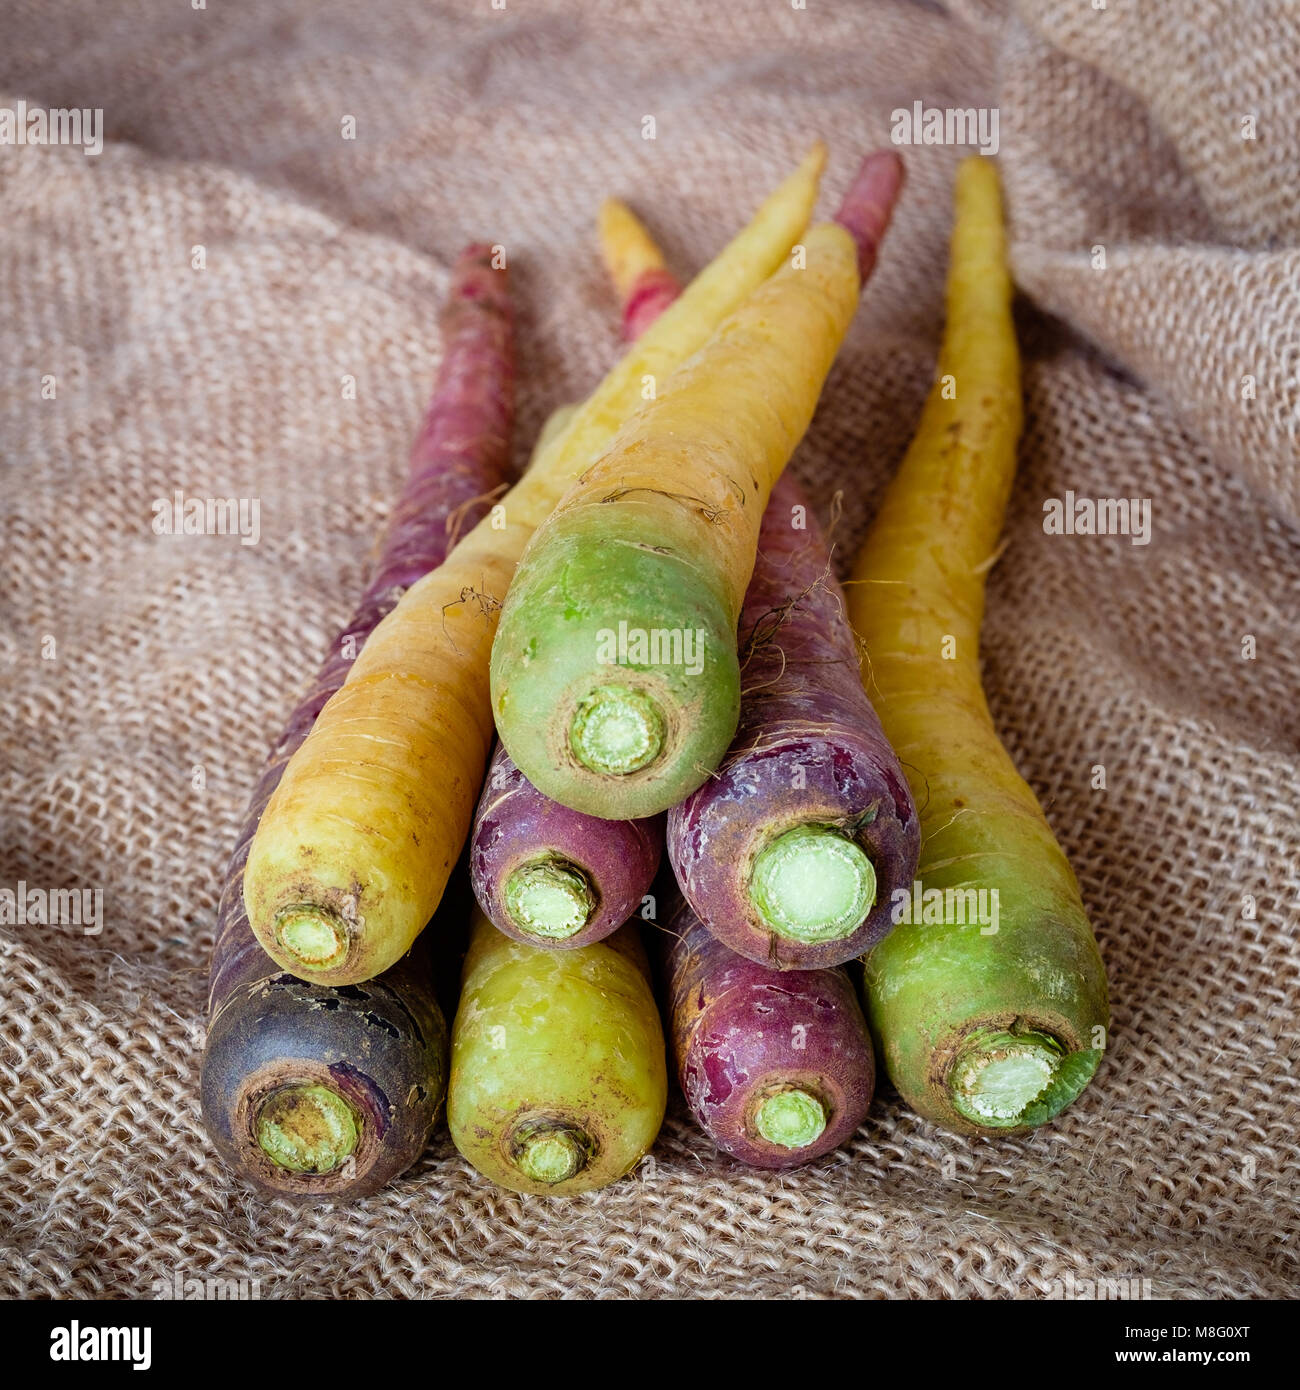 Yellow and purple carrots of Polignano. Apulian food. Italy. Stock Photo